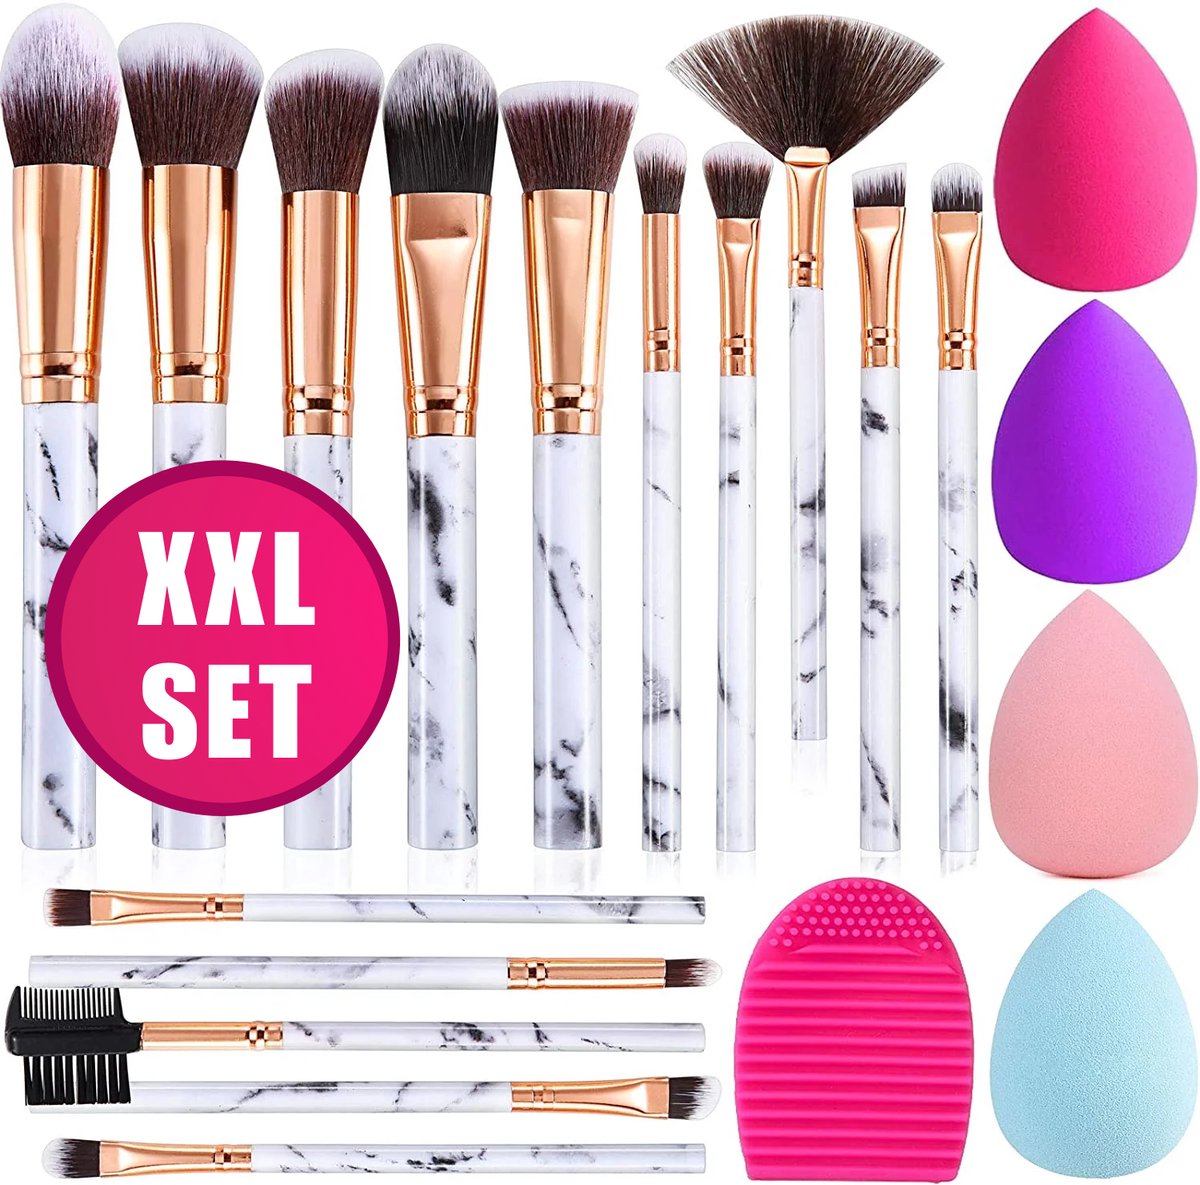 Renalux Luxe Make Up Kwasten Set 20 Delig + Beauty Blender Set - Limited Edition Marmeren Uitvoering - Inclusief Kwasten Reiniger - Make Up Spons Set - XXL Set 20-Delig